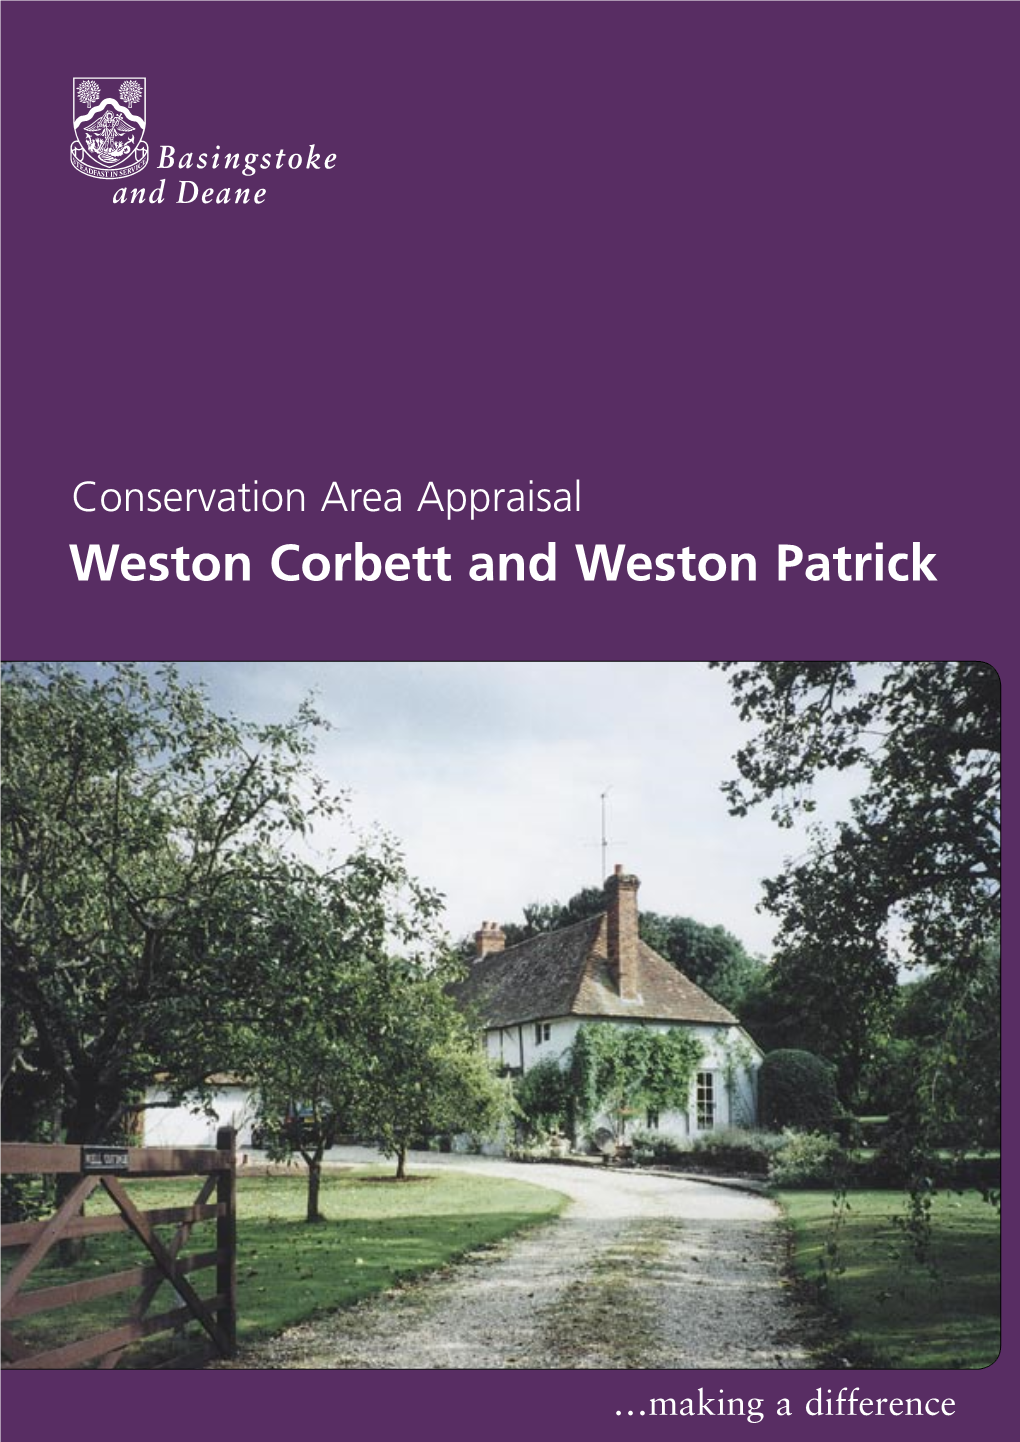 Weston Corbett and Weston Patrick Conservation Area Appraisal